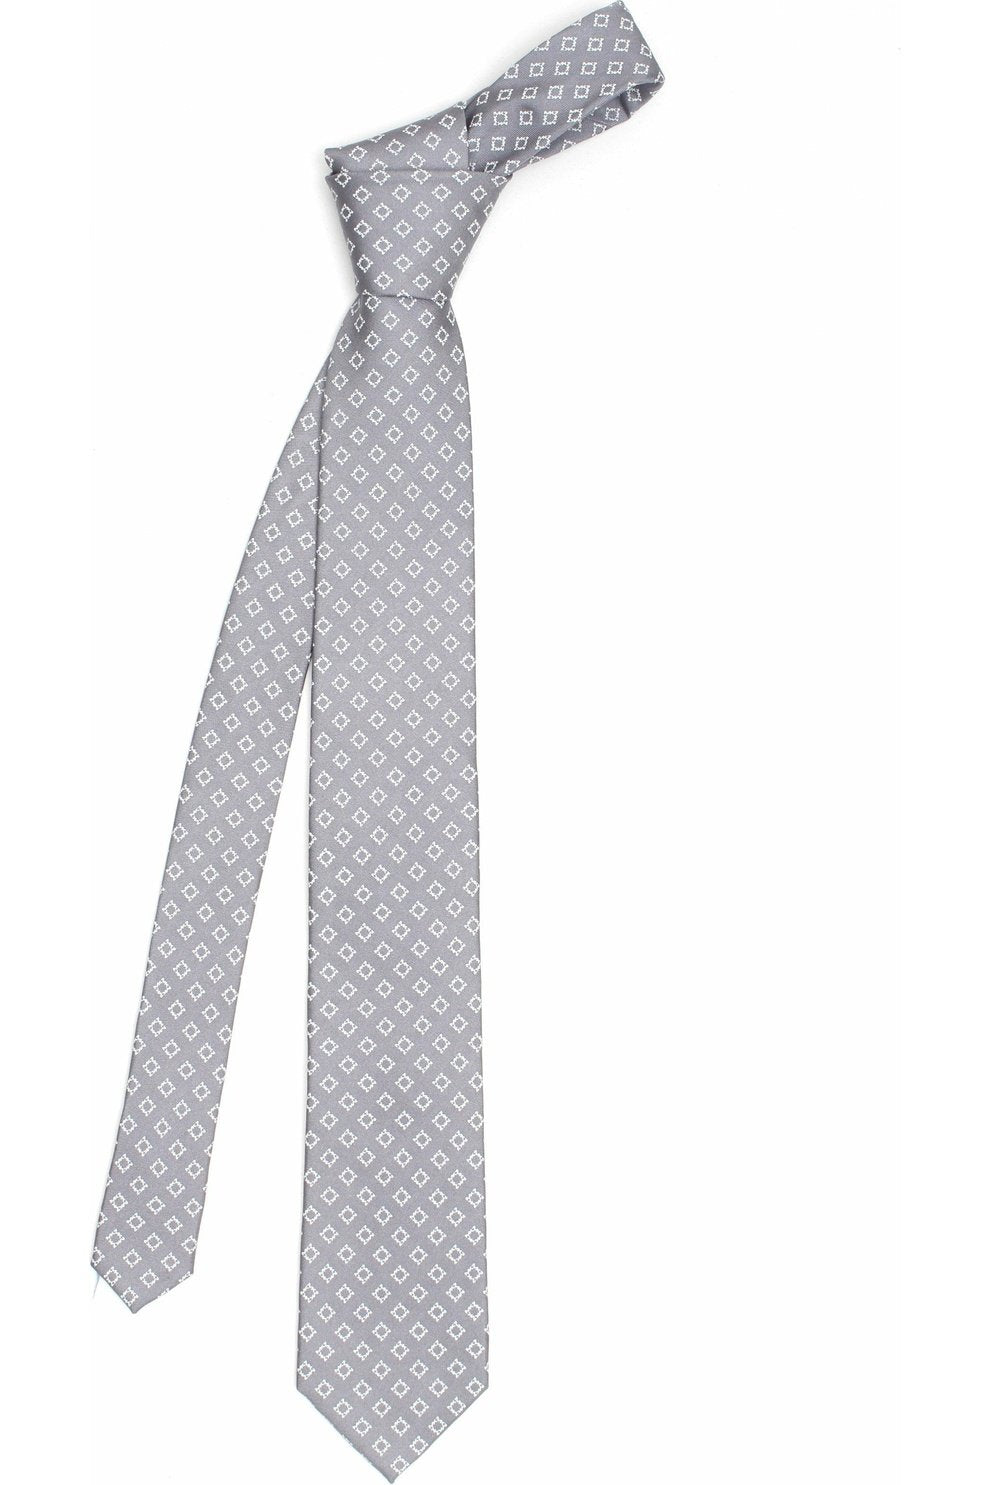 MICHAELKORS MD0MD91005 cravatta in seta con rombi stampati